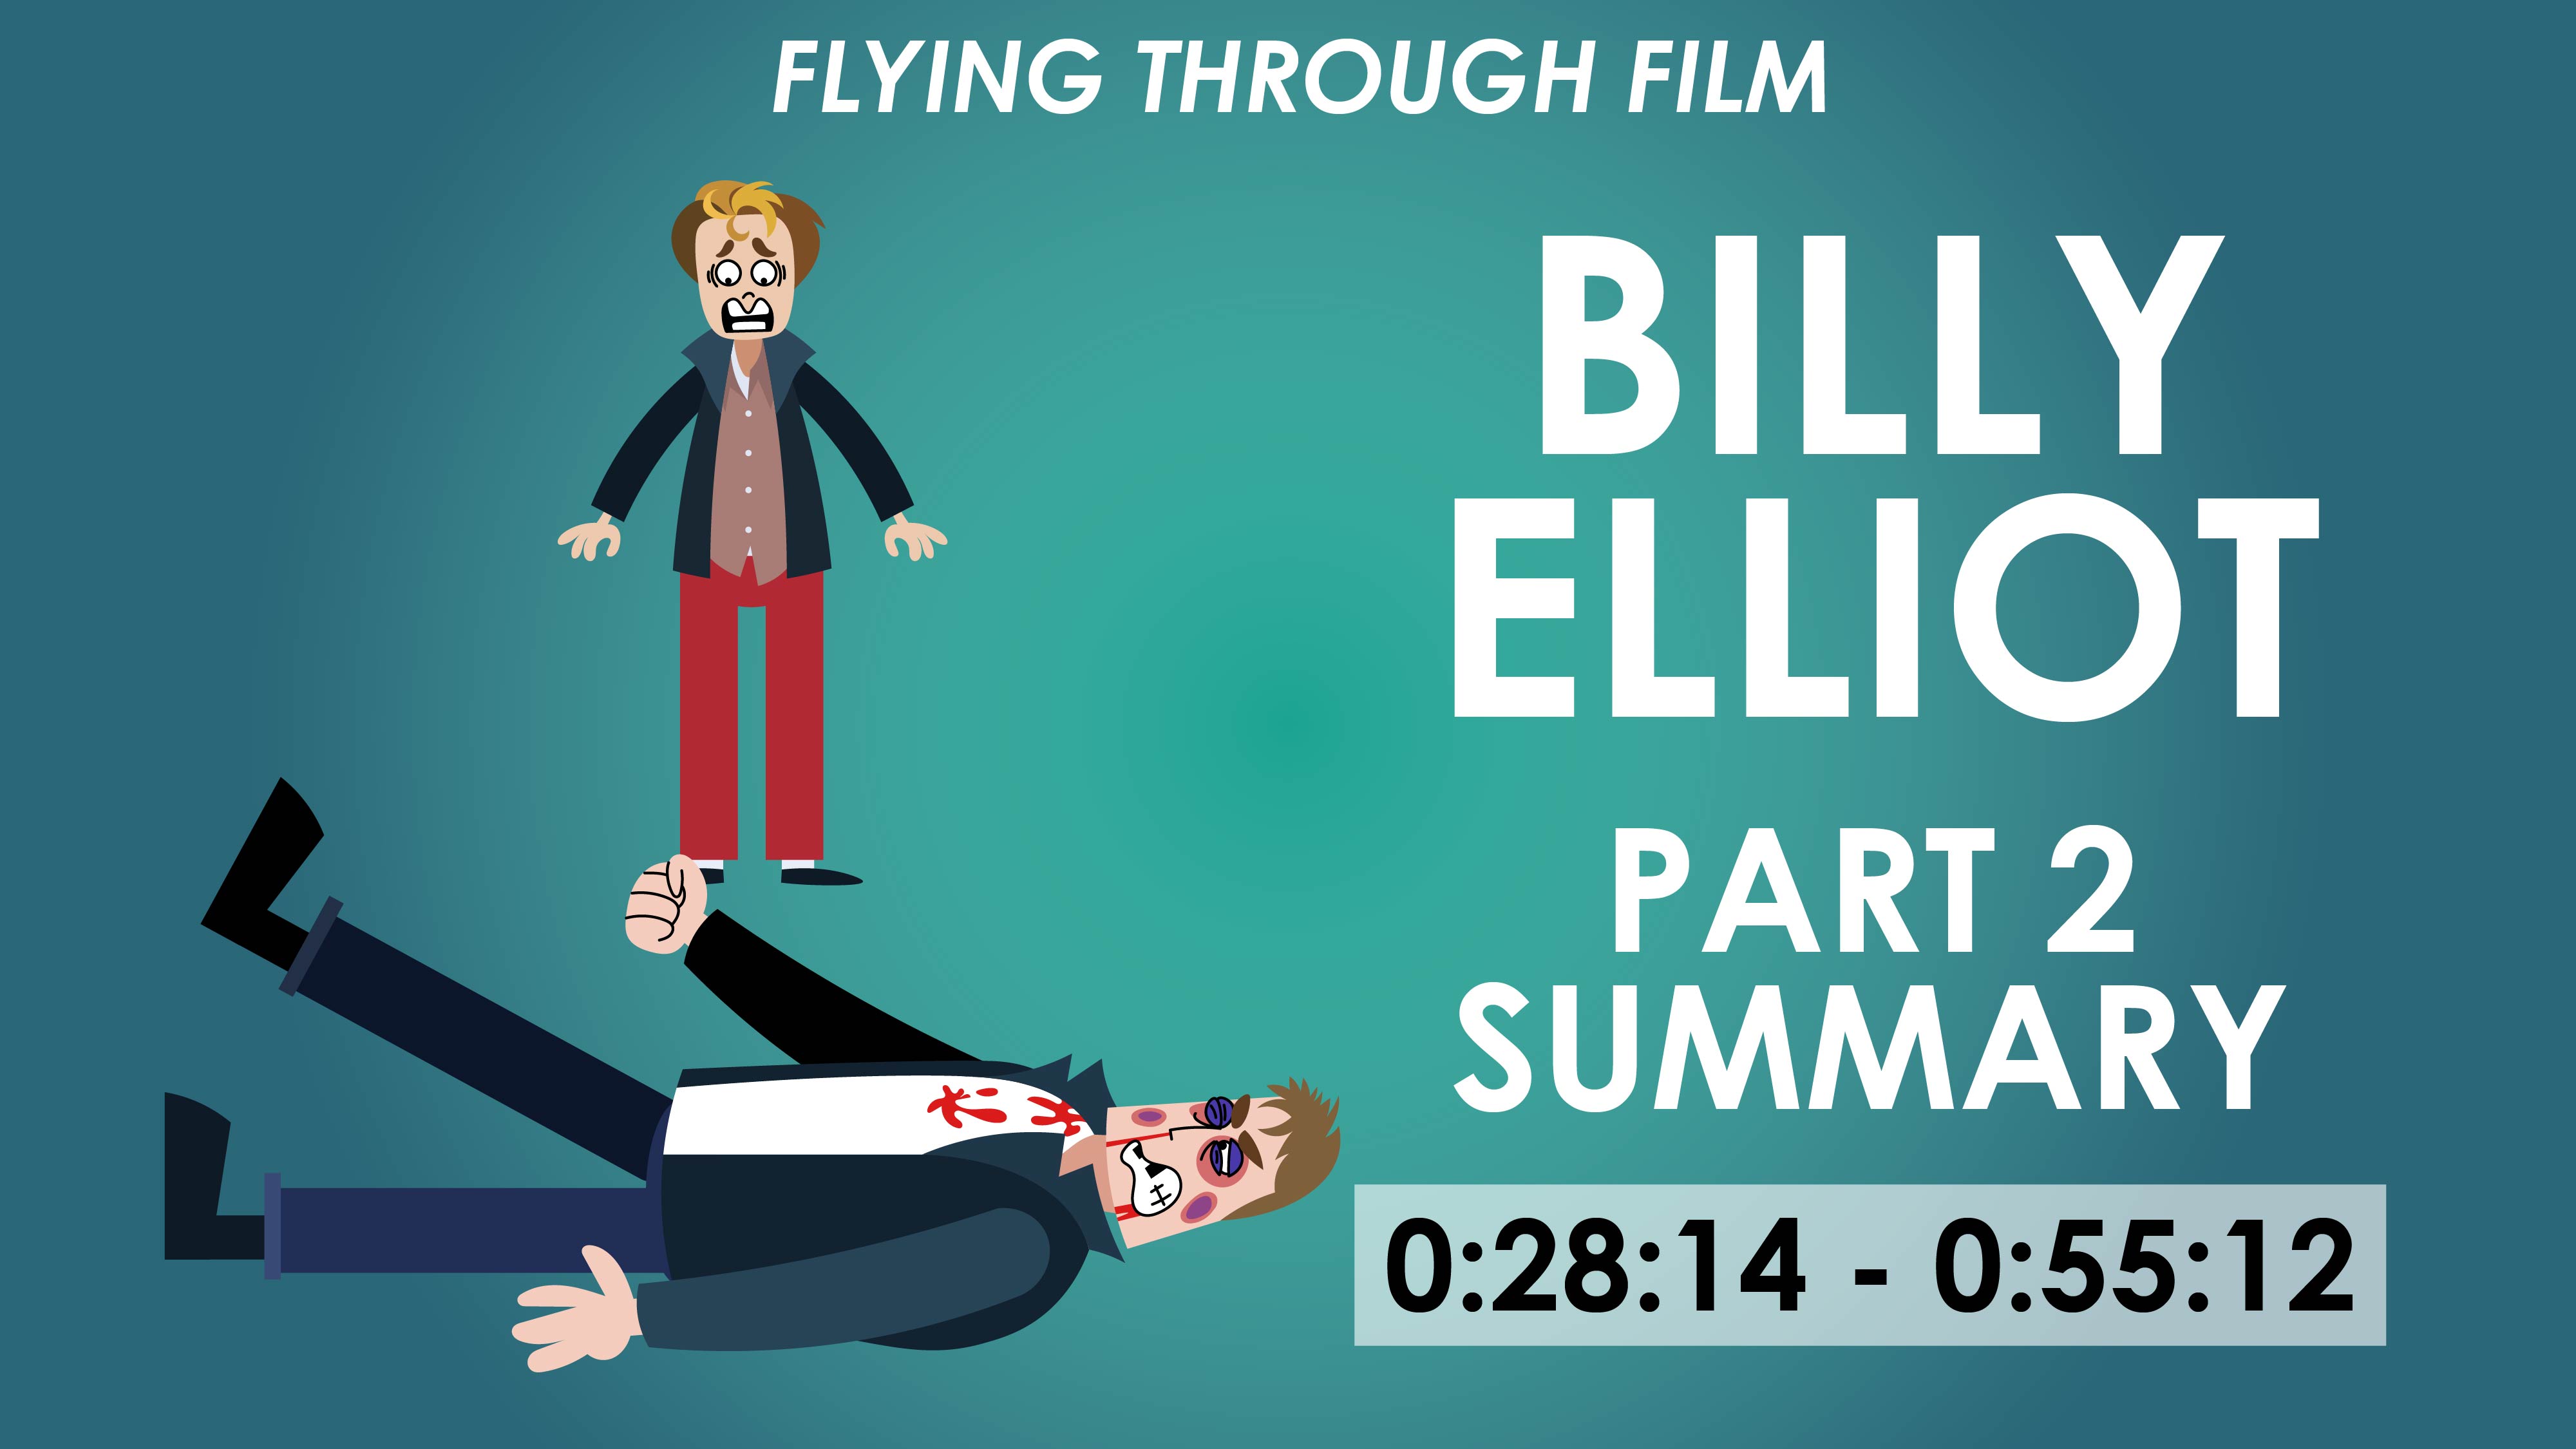 Billy Elliot - Part 2 Summary - Flying Through Film Series